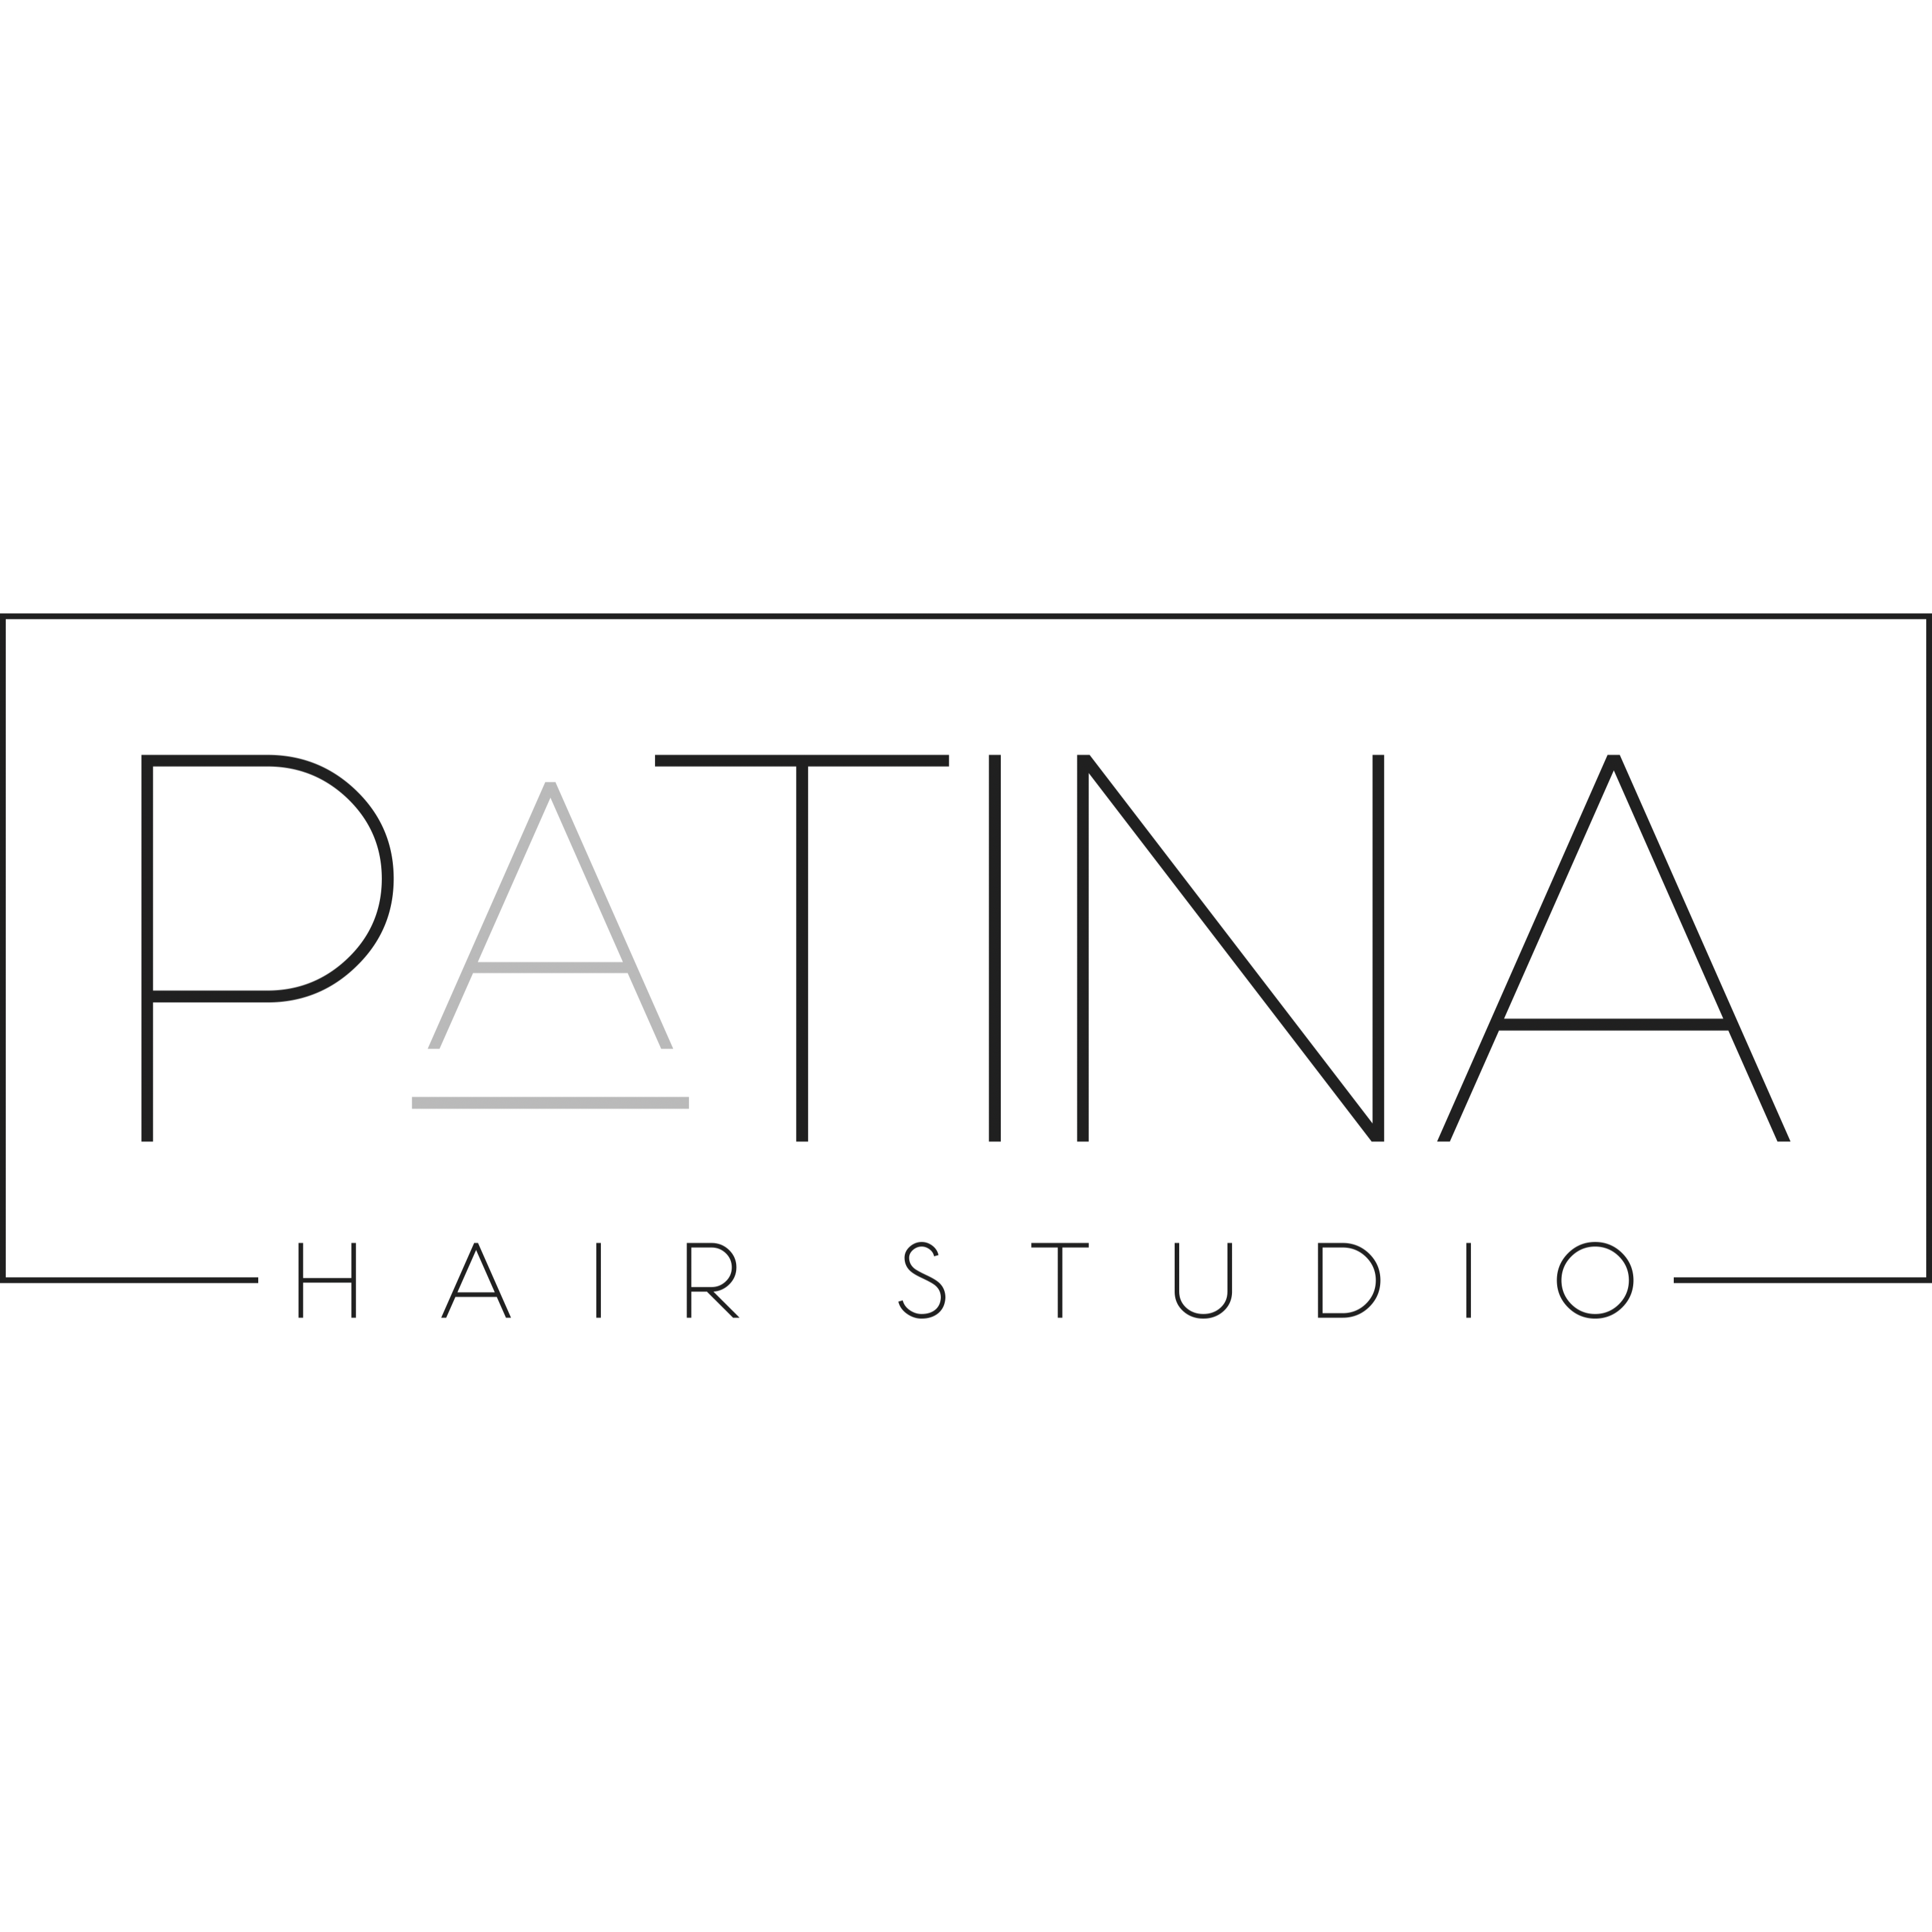 paTina hair studio - Ridgeland, MS 39157 - (769)572-7516 | ShowMeLocal.com